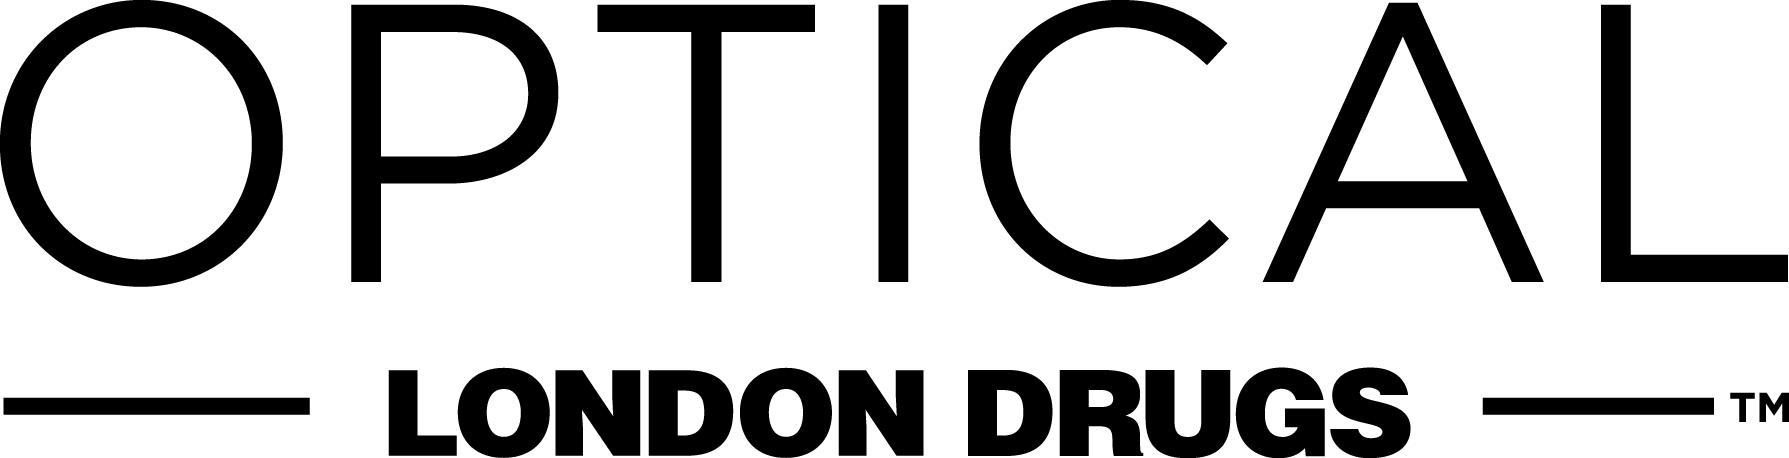 London Drugs Optical logo